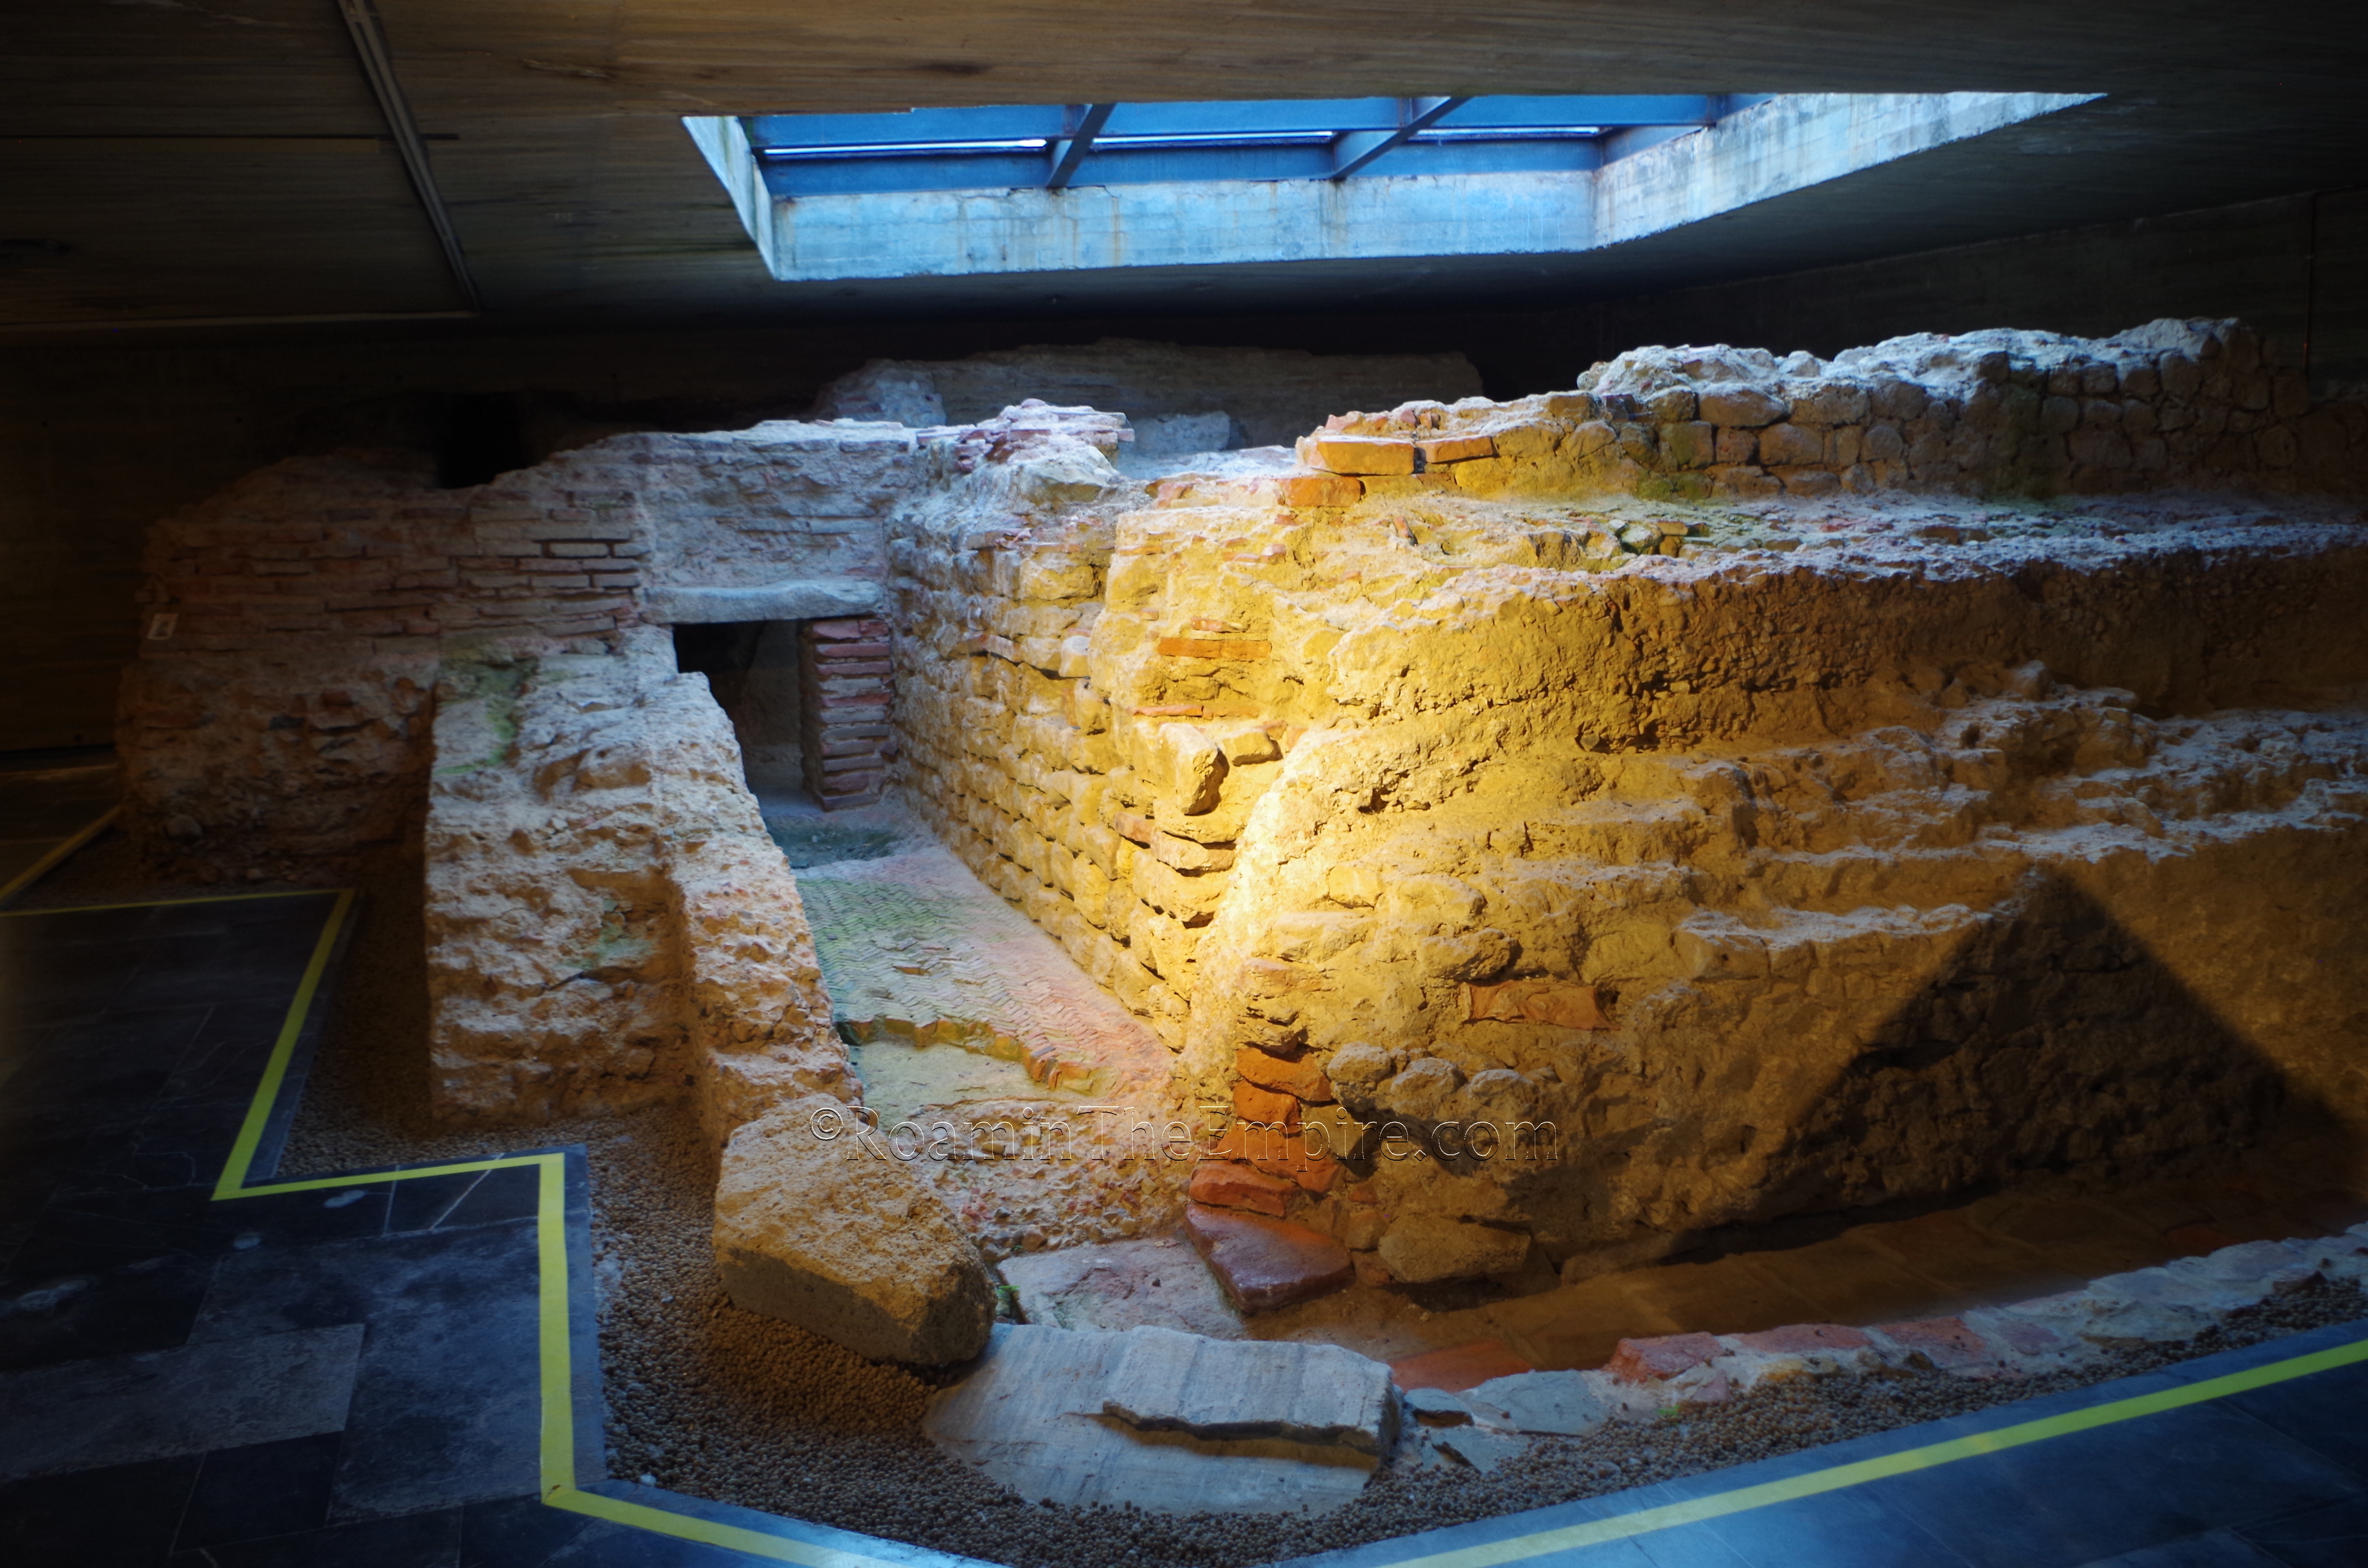 Latrine area of the baths in the Cripta Arqueológica de Puerta Obispo.